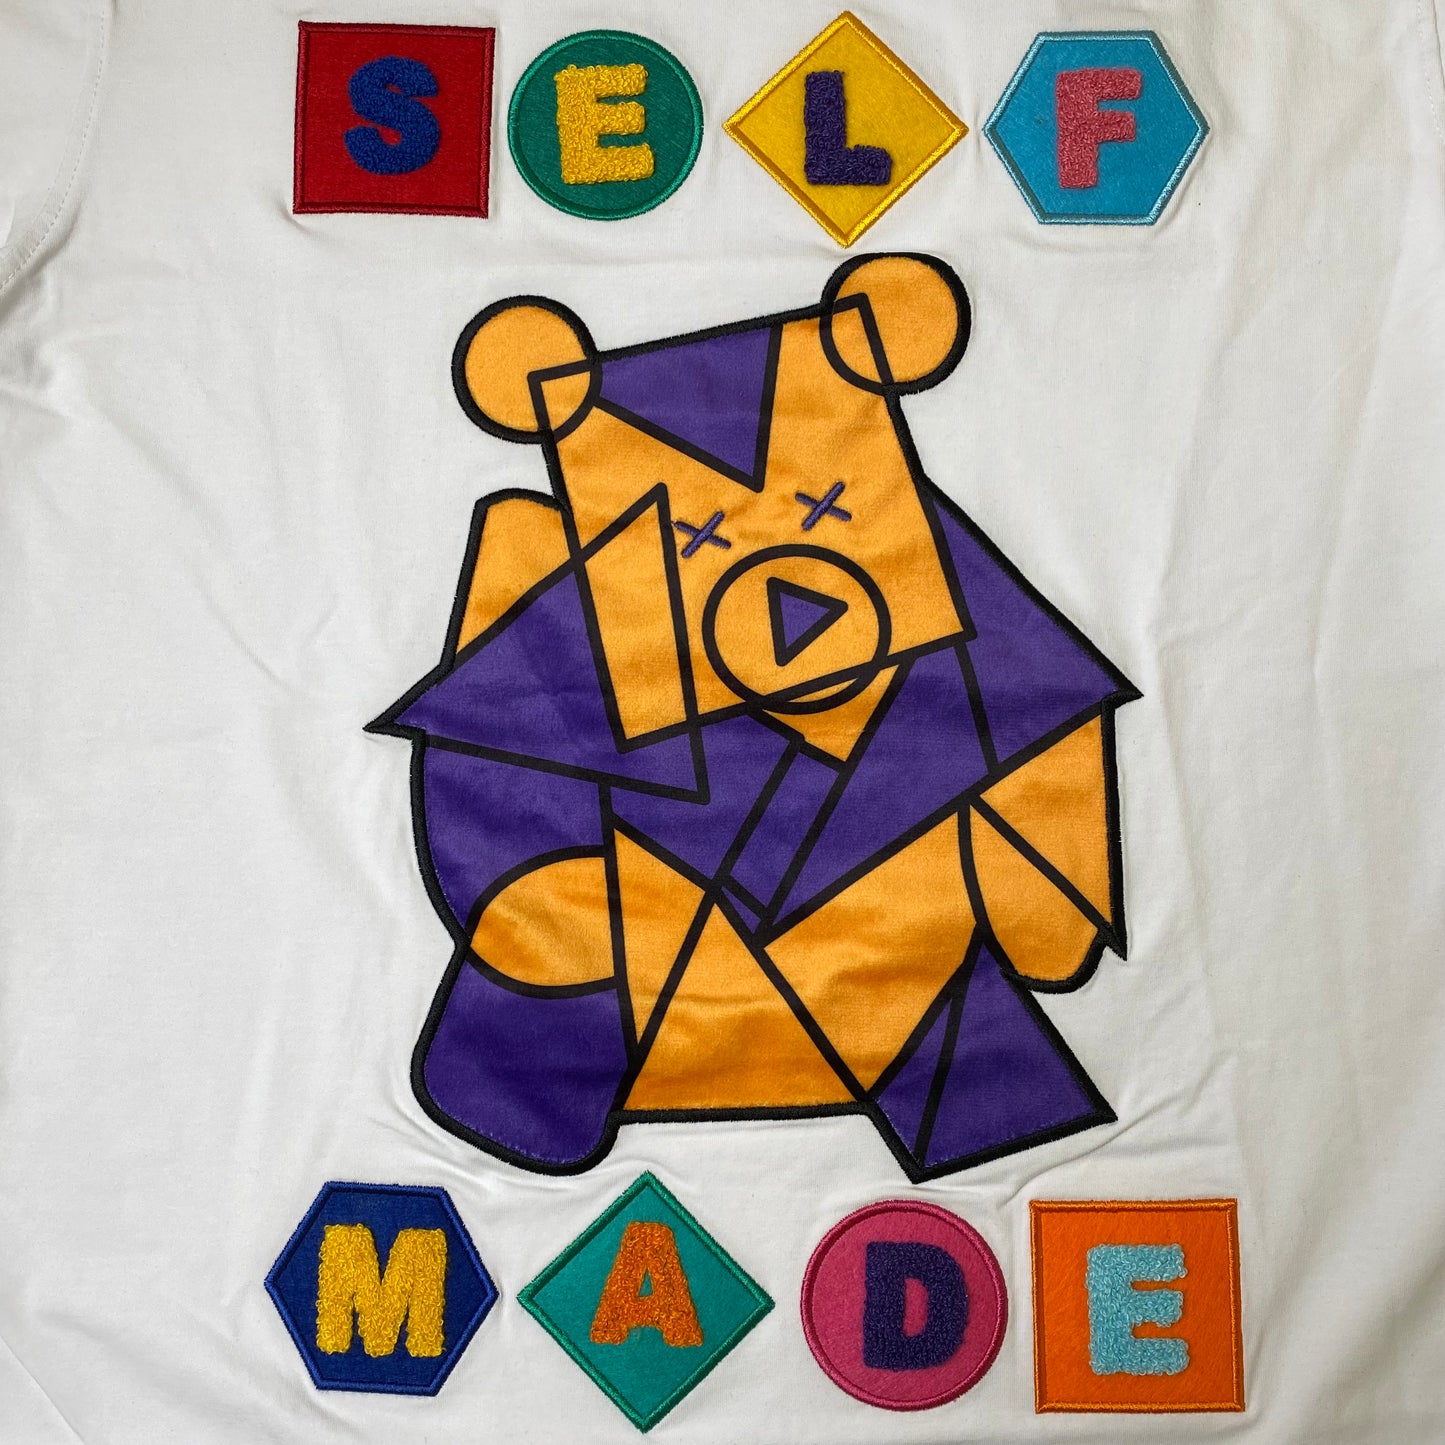 Self Made Bear Graphic T-Shirt